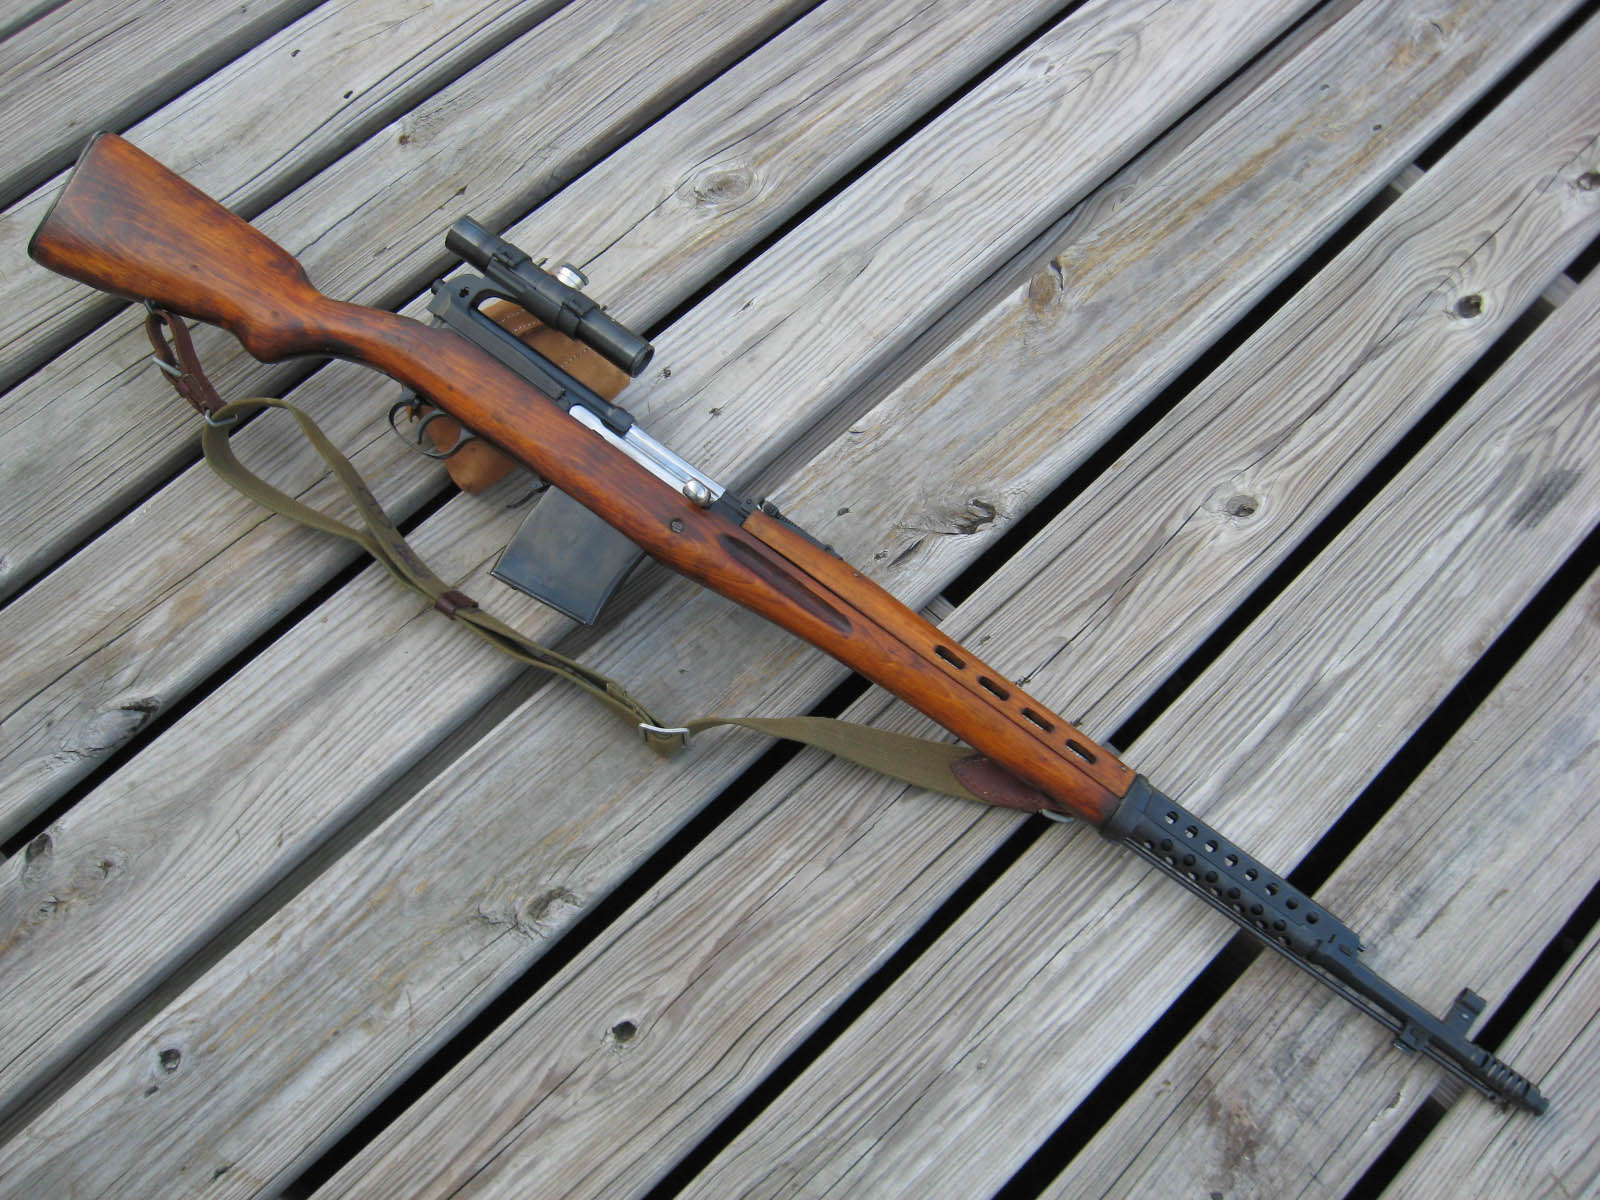 Svt-40 Rifle #26